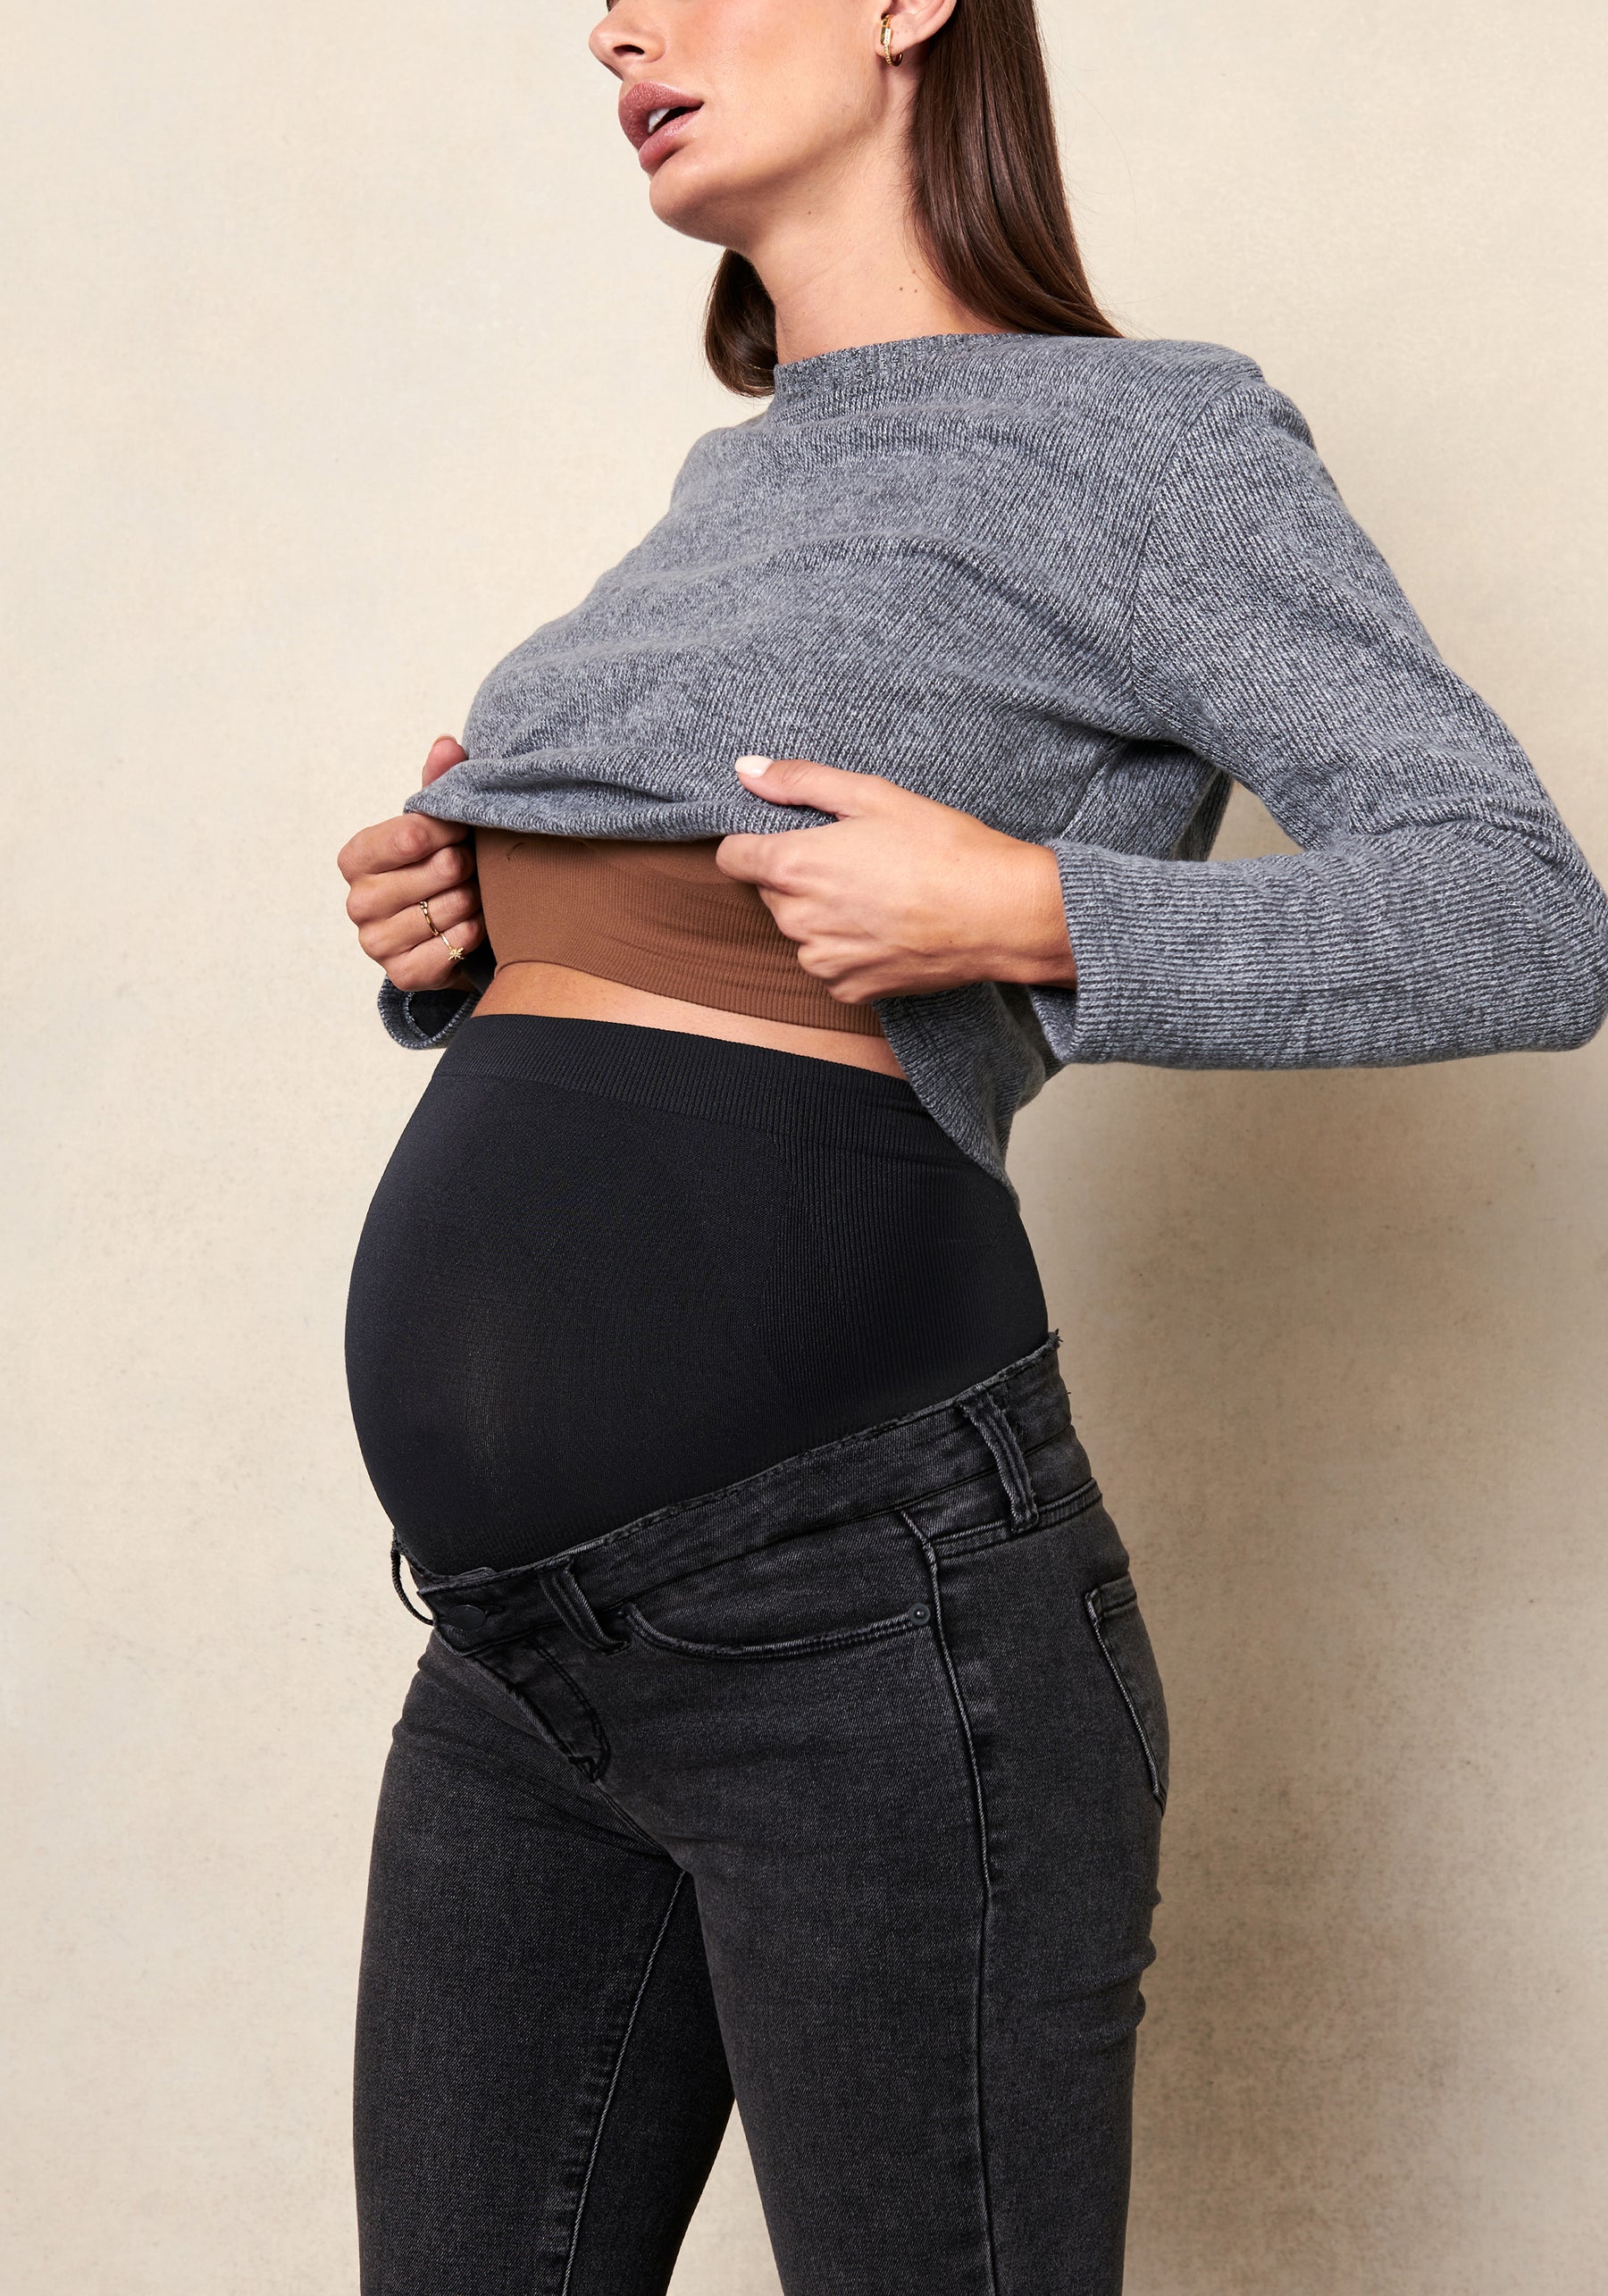 Hope - The Maternity jeans  Latest maternity wear, Maternity wear